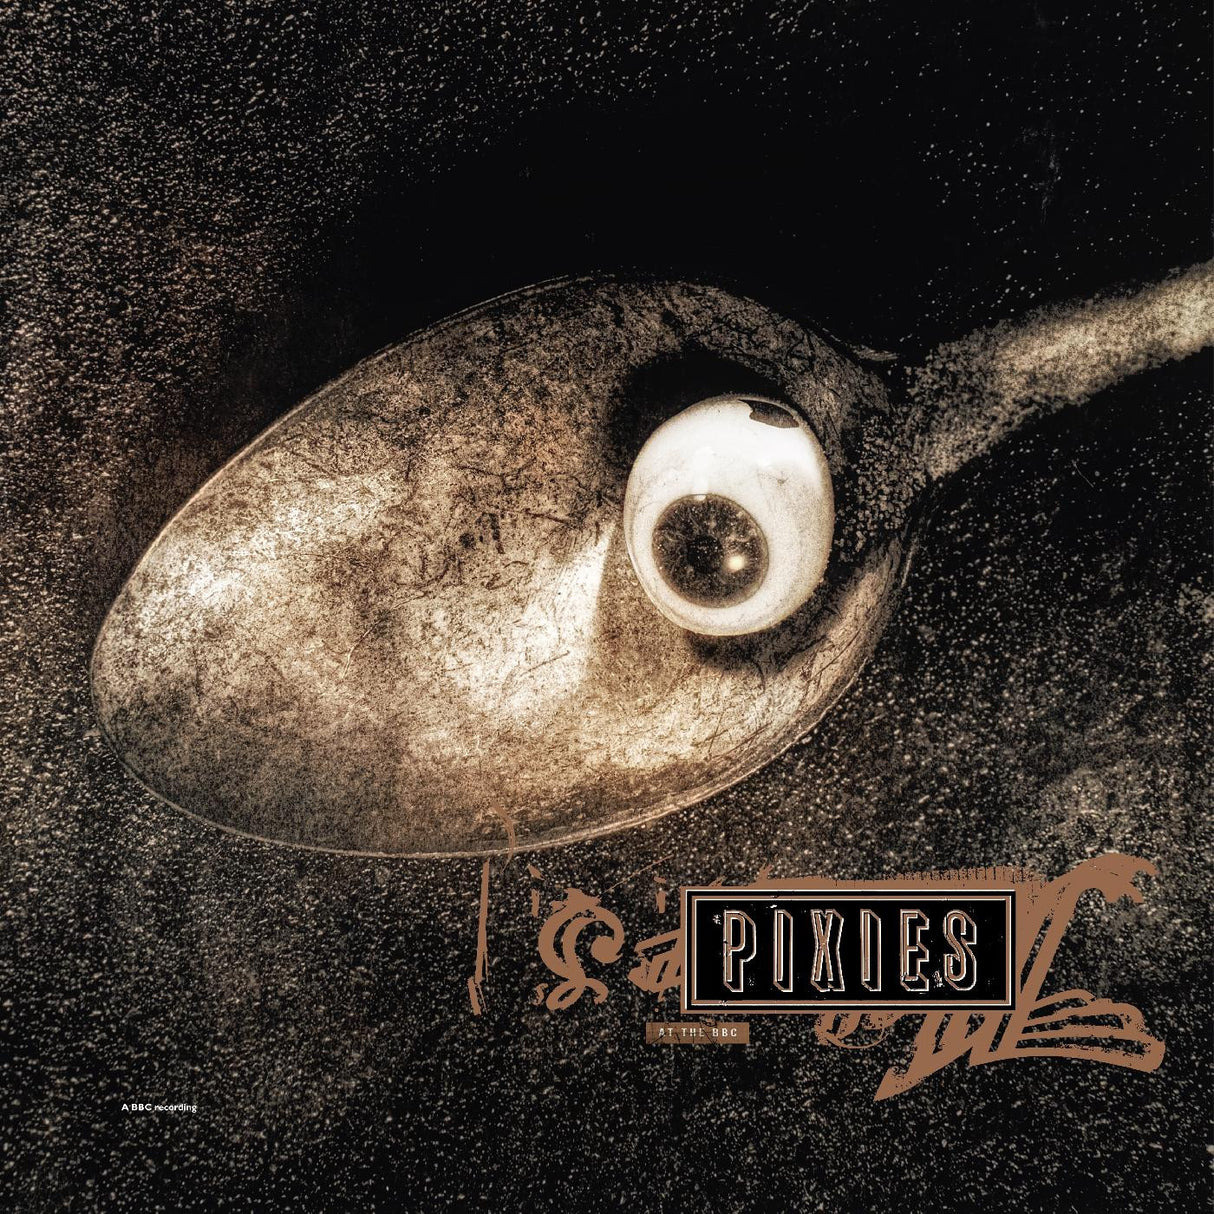 Pixies at the BBC [3LP] [Vinyl]